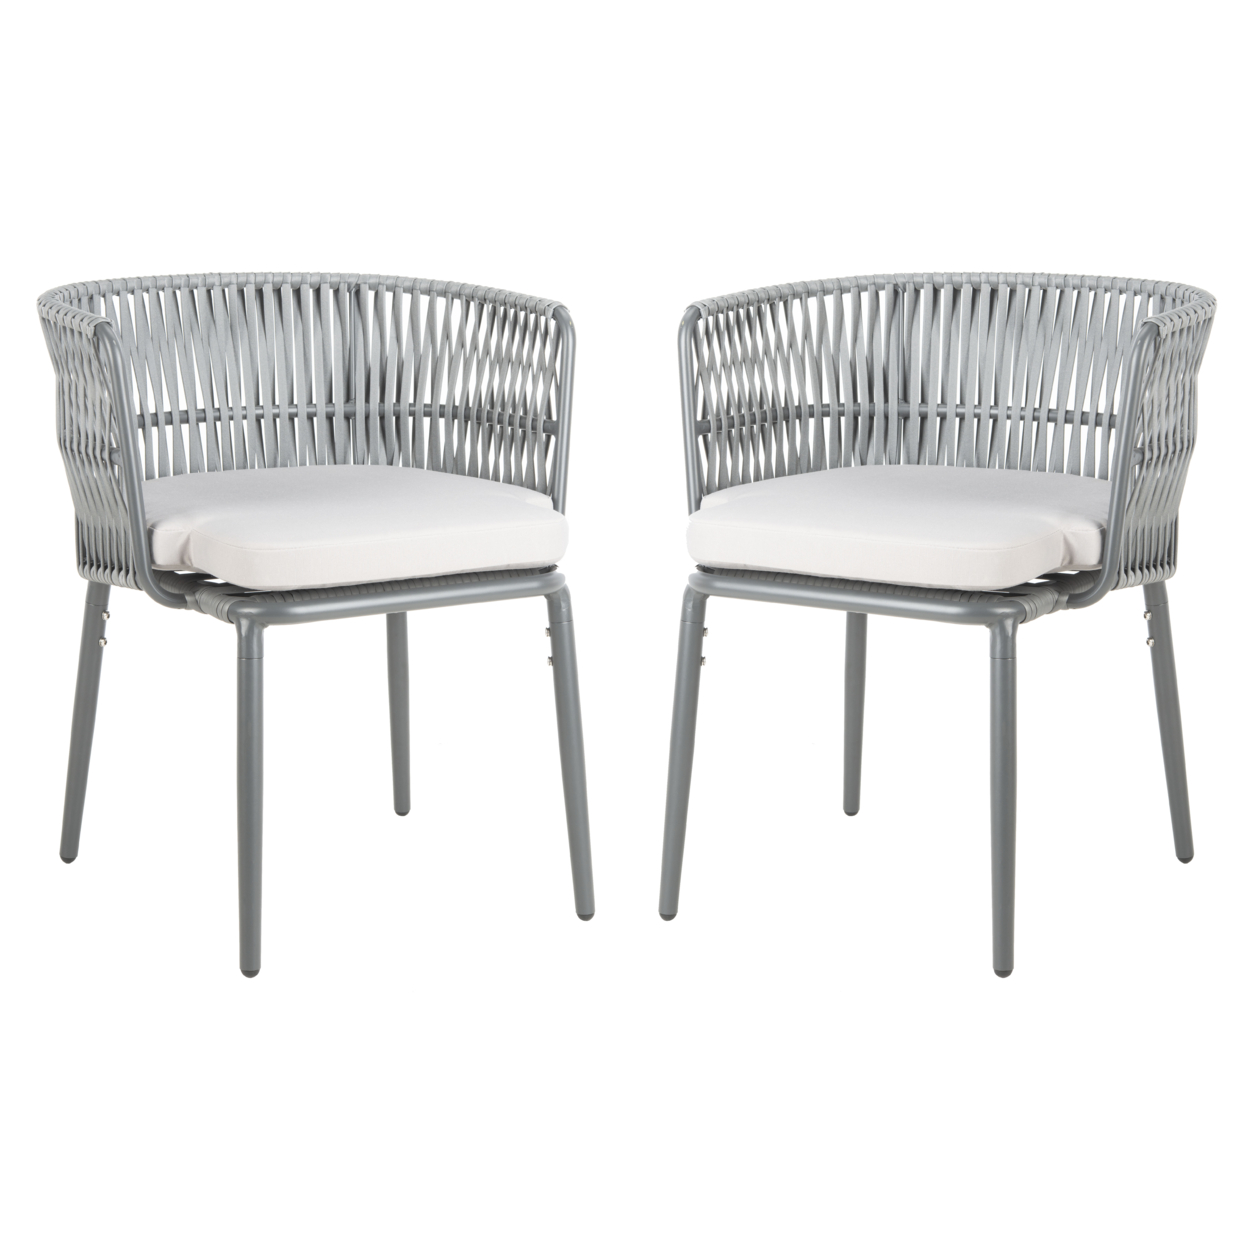 SAFAVIEH Outdoor Collection Kiyan Rope Chair Grey/Grey Cushion